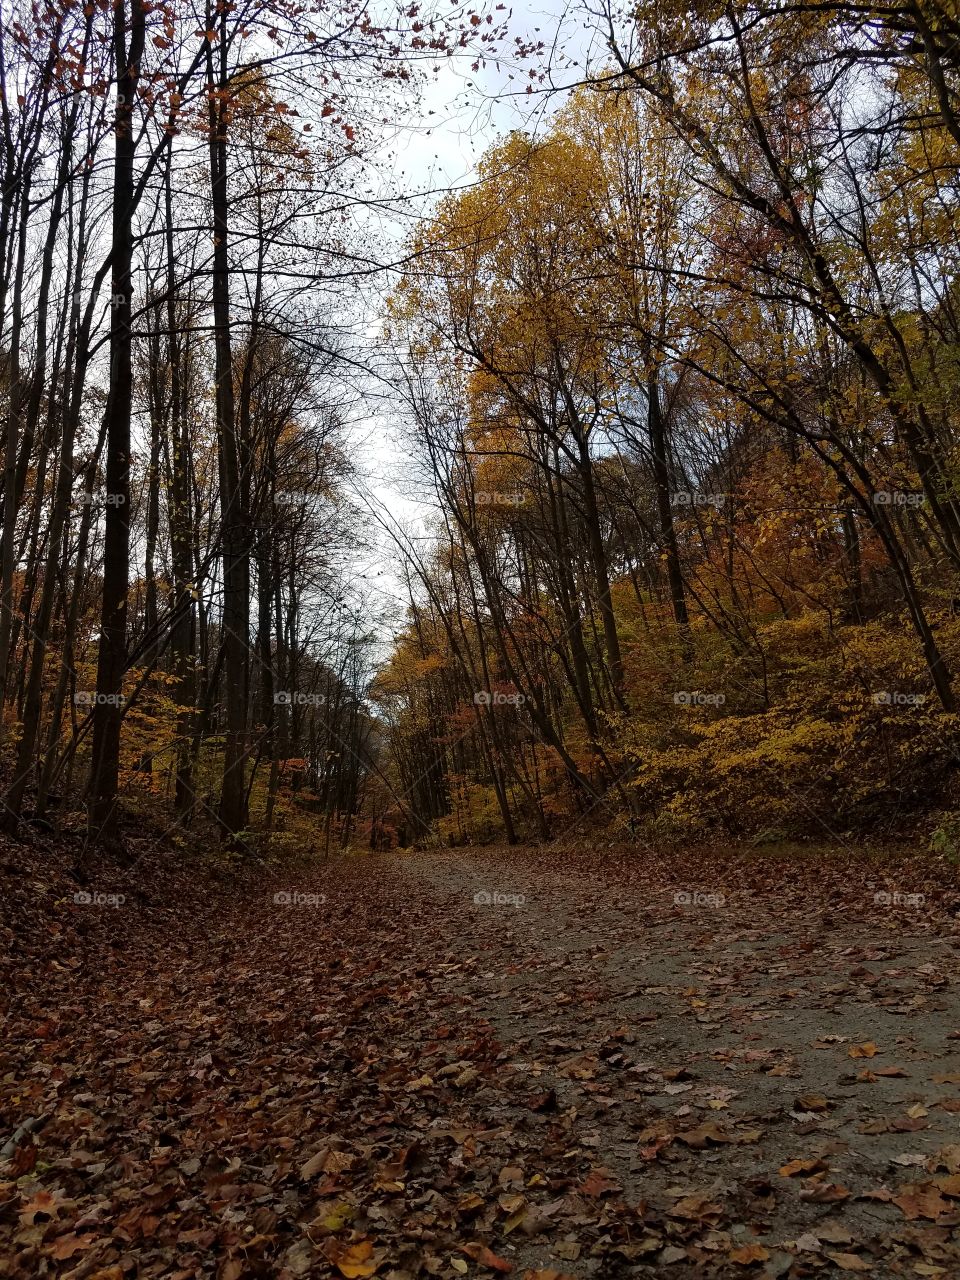 Fall trails